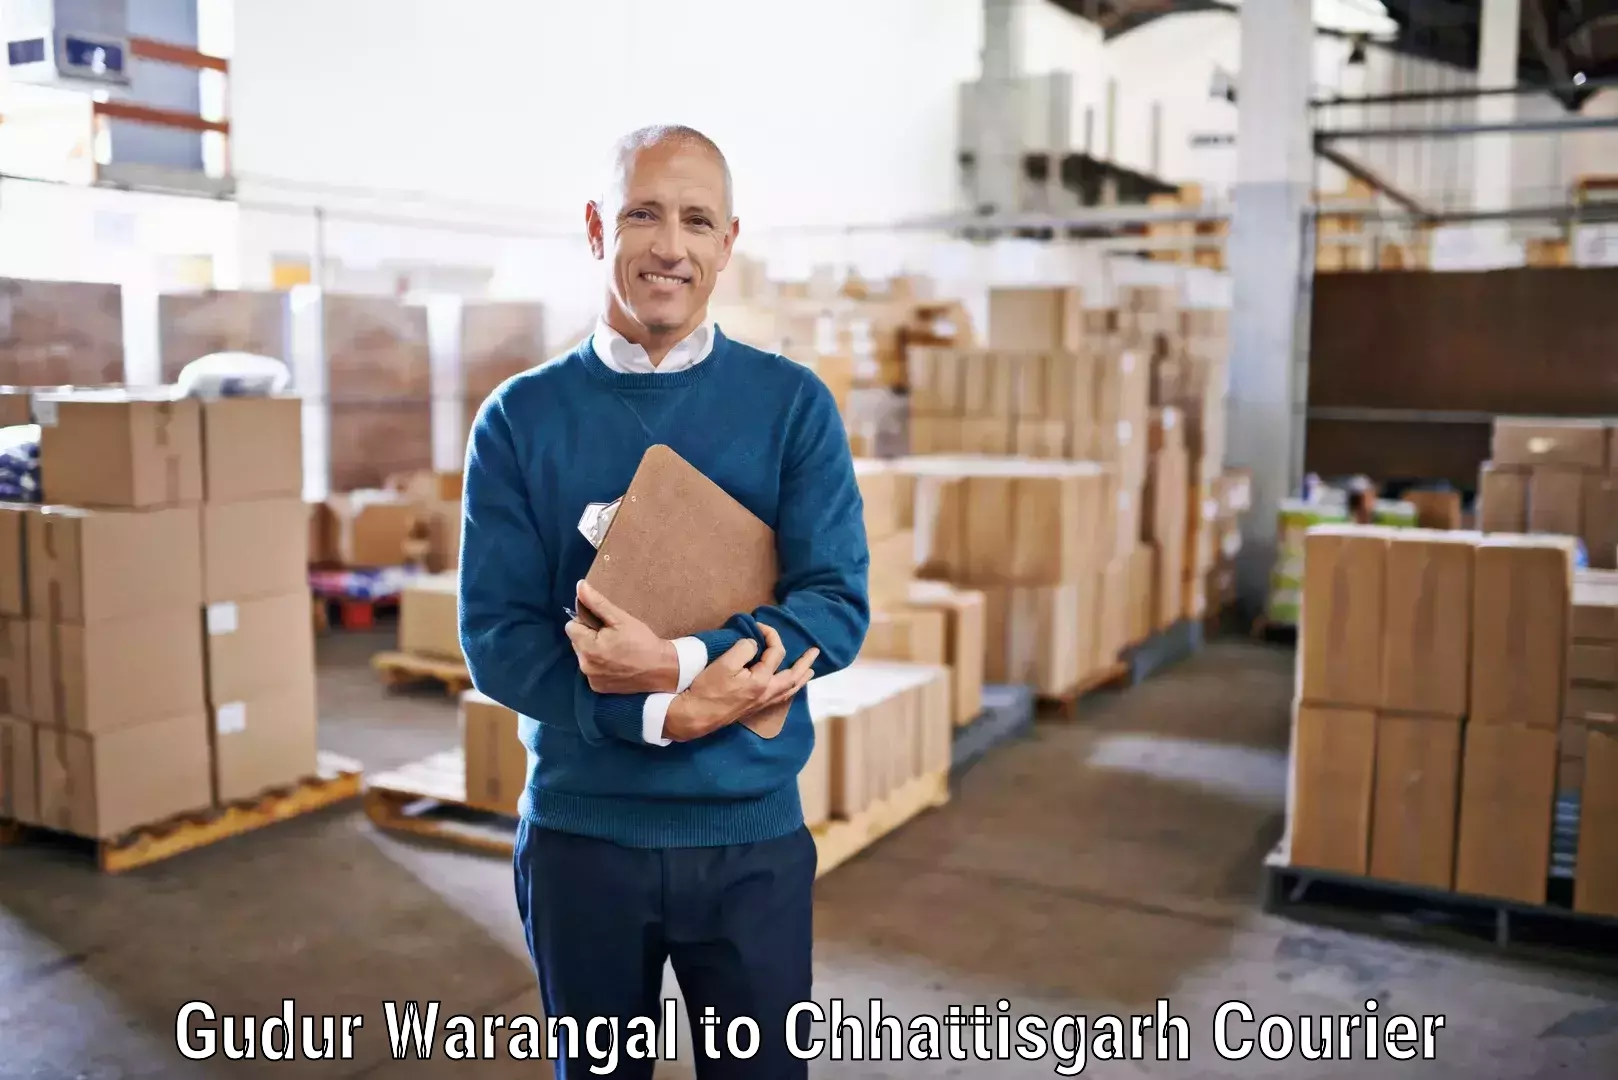 Reliable courier service Gudur Warangal to Korea Chhattisgarh